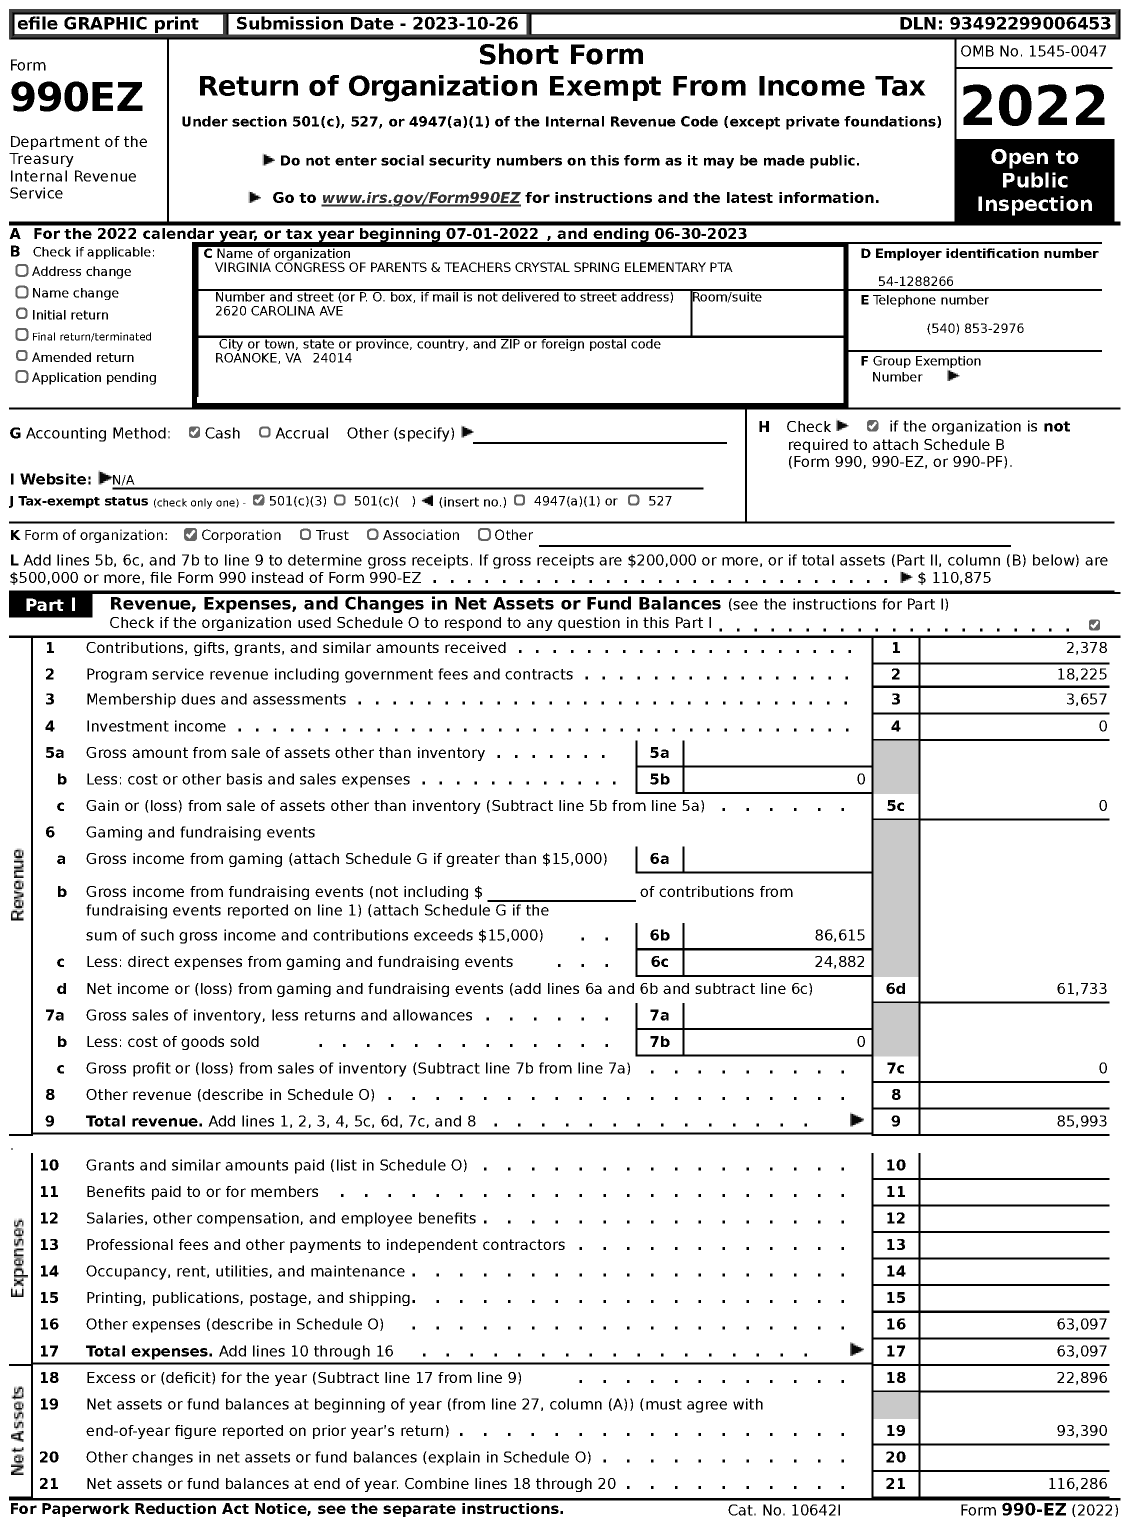 Image of first page of 2022 Form 990EZ for Virginia PTA - Crystal Spring Elem PTA